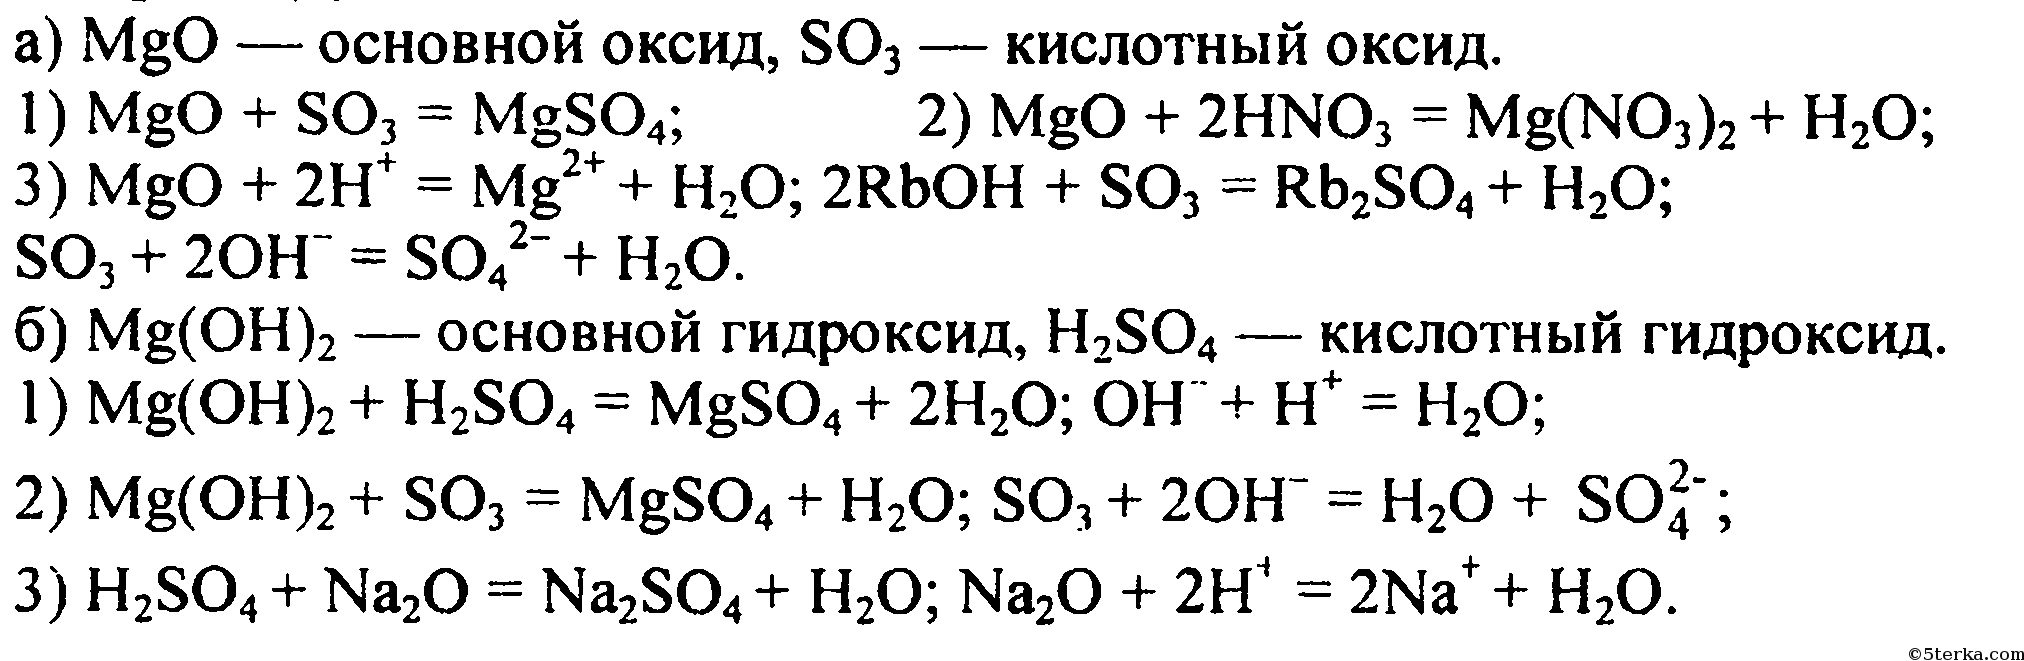 Серная кислота оксид магния формула. Уравнение химической реакции MGO И so3. Химические уравнения магний хлор 2. Цепочка реакций с магнием. MGO+h2so4 уравнение реакции.